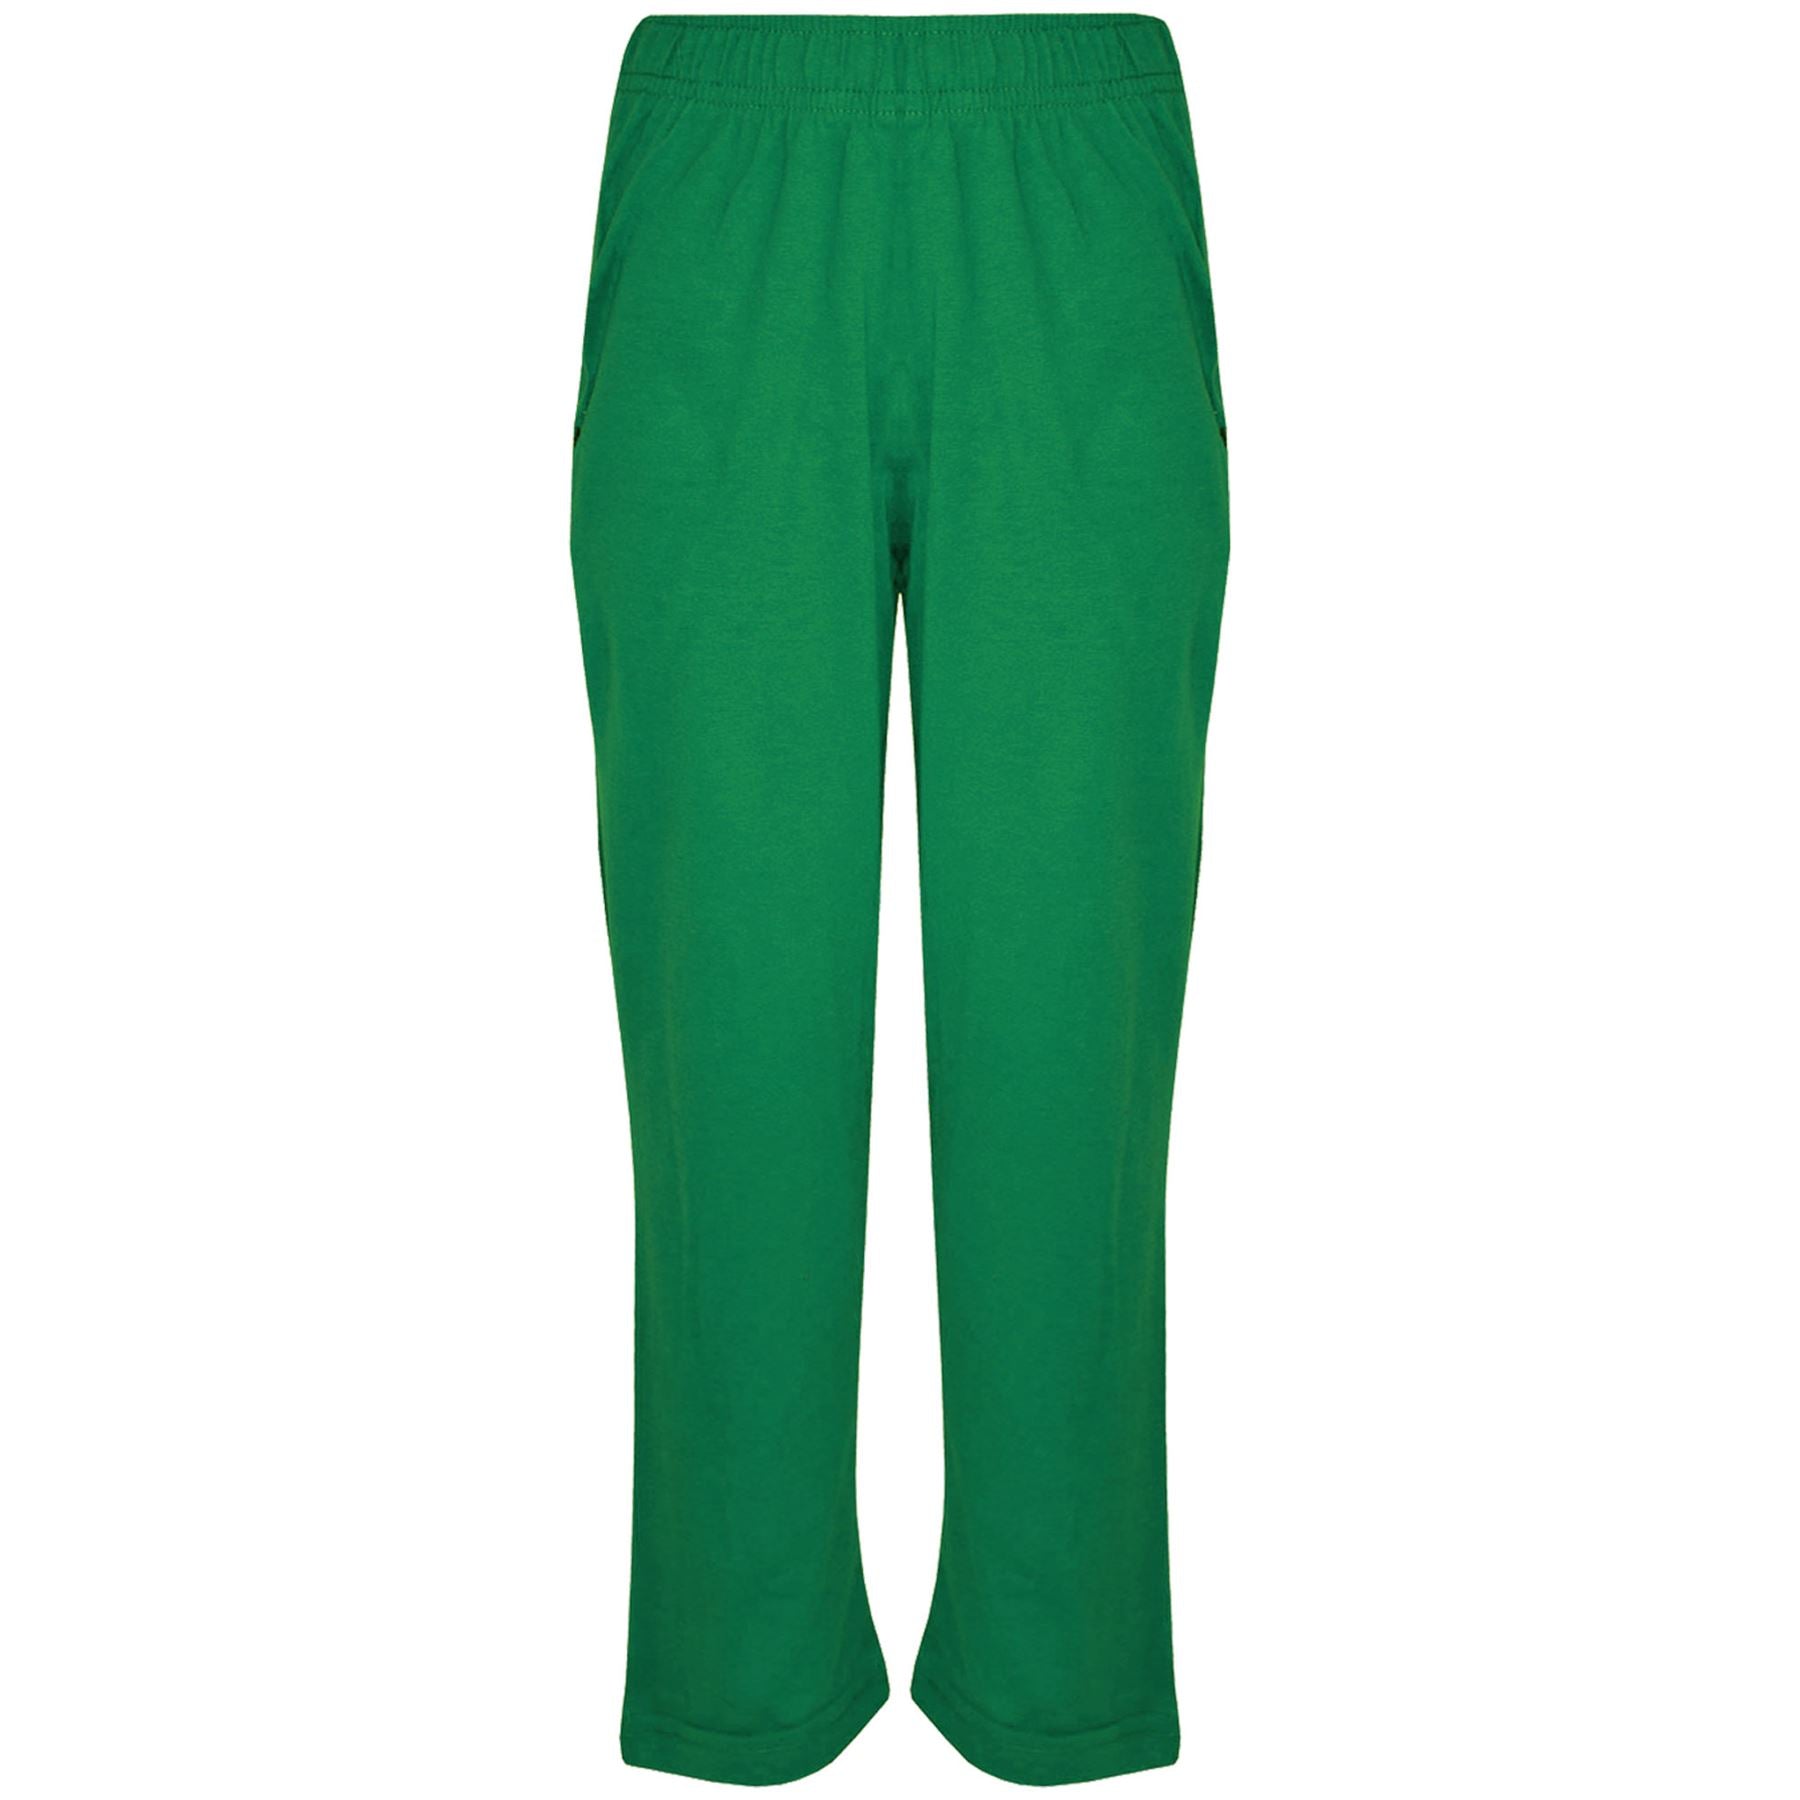 Unisex Xmas Ya Filthy Animal Print Green Pyjamas Set